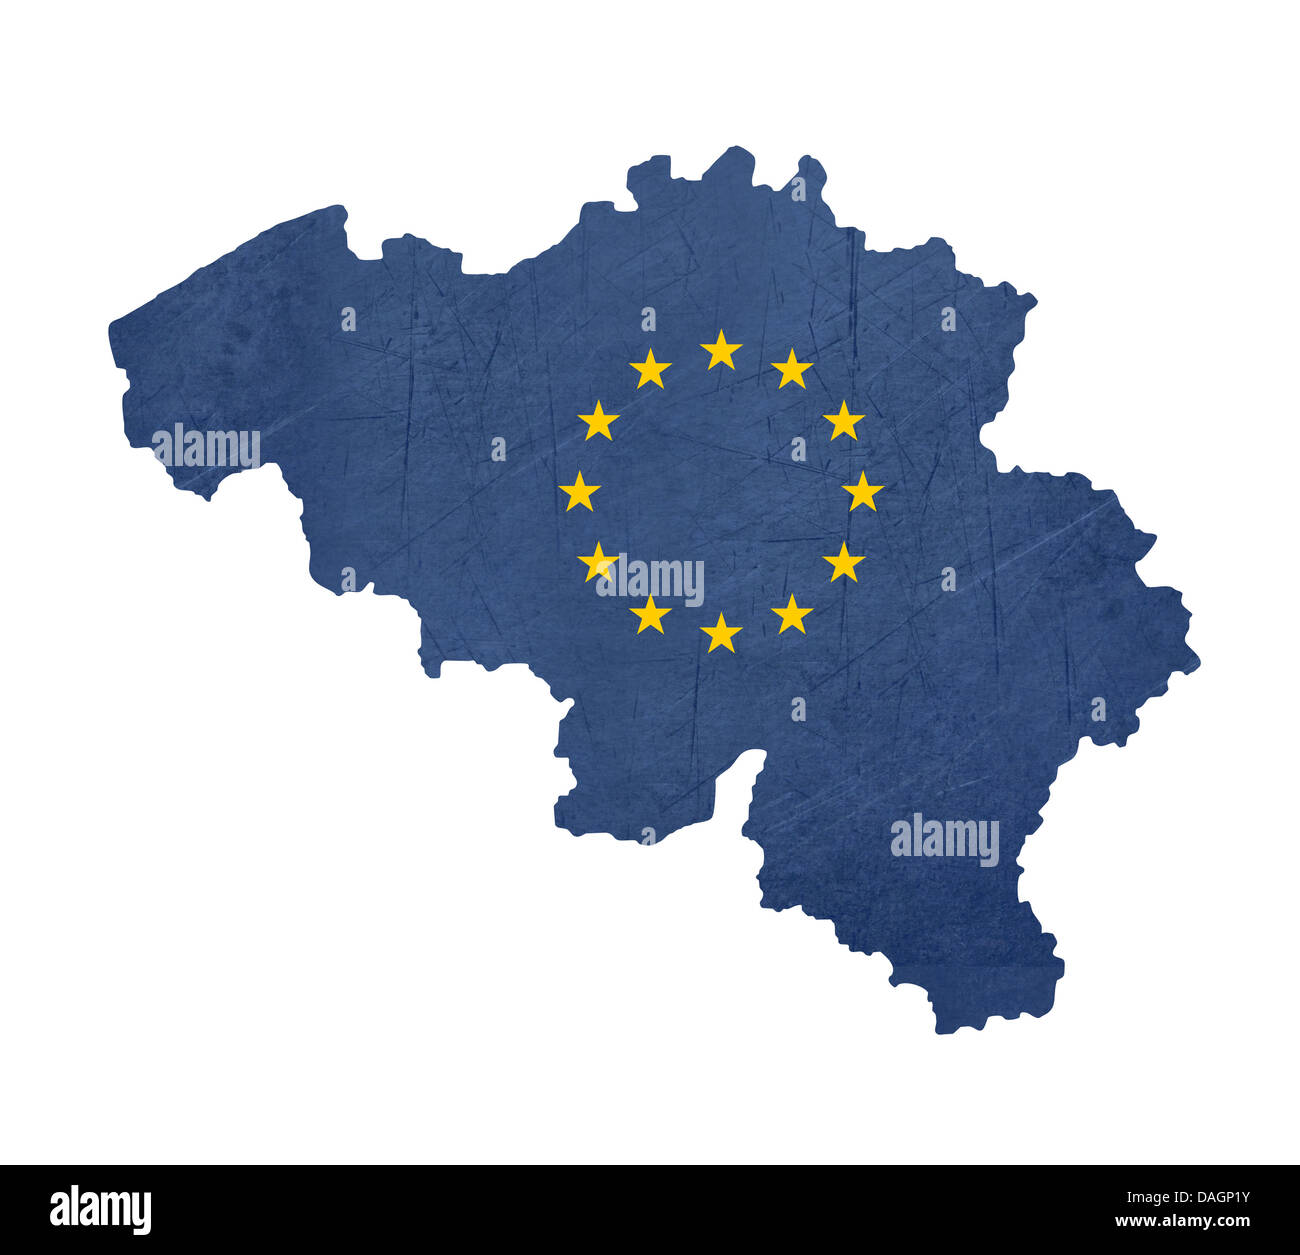 European flag map of Belgium isolated on white background. Stock Photo